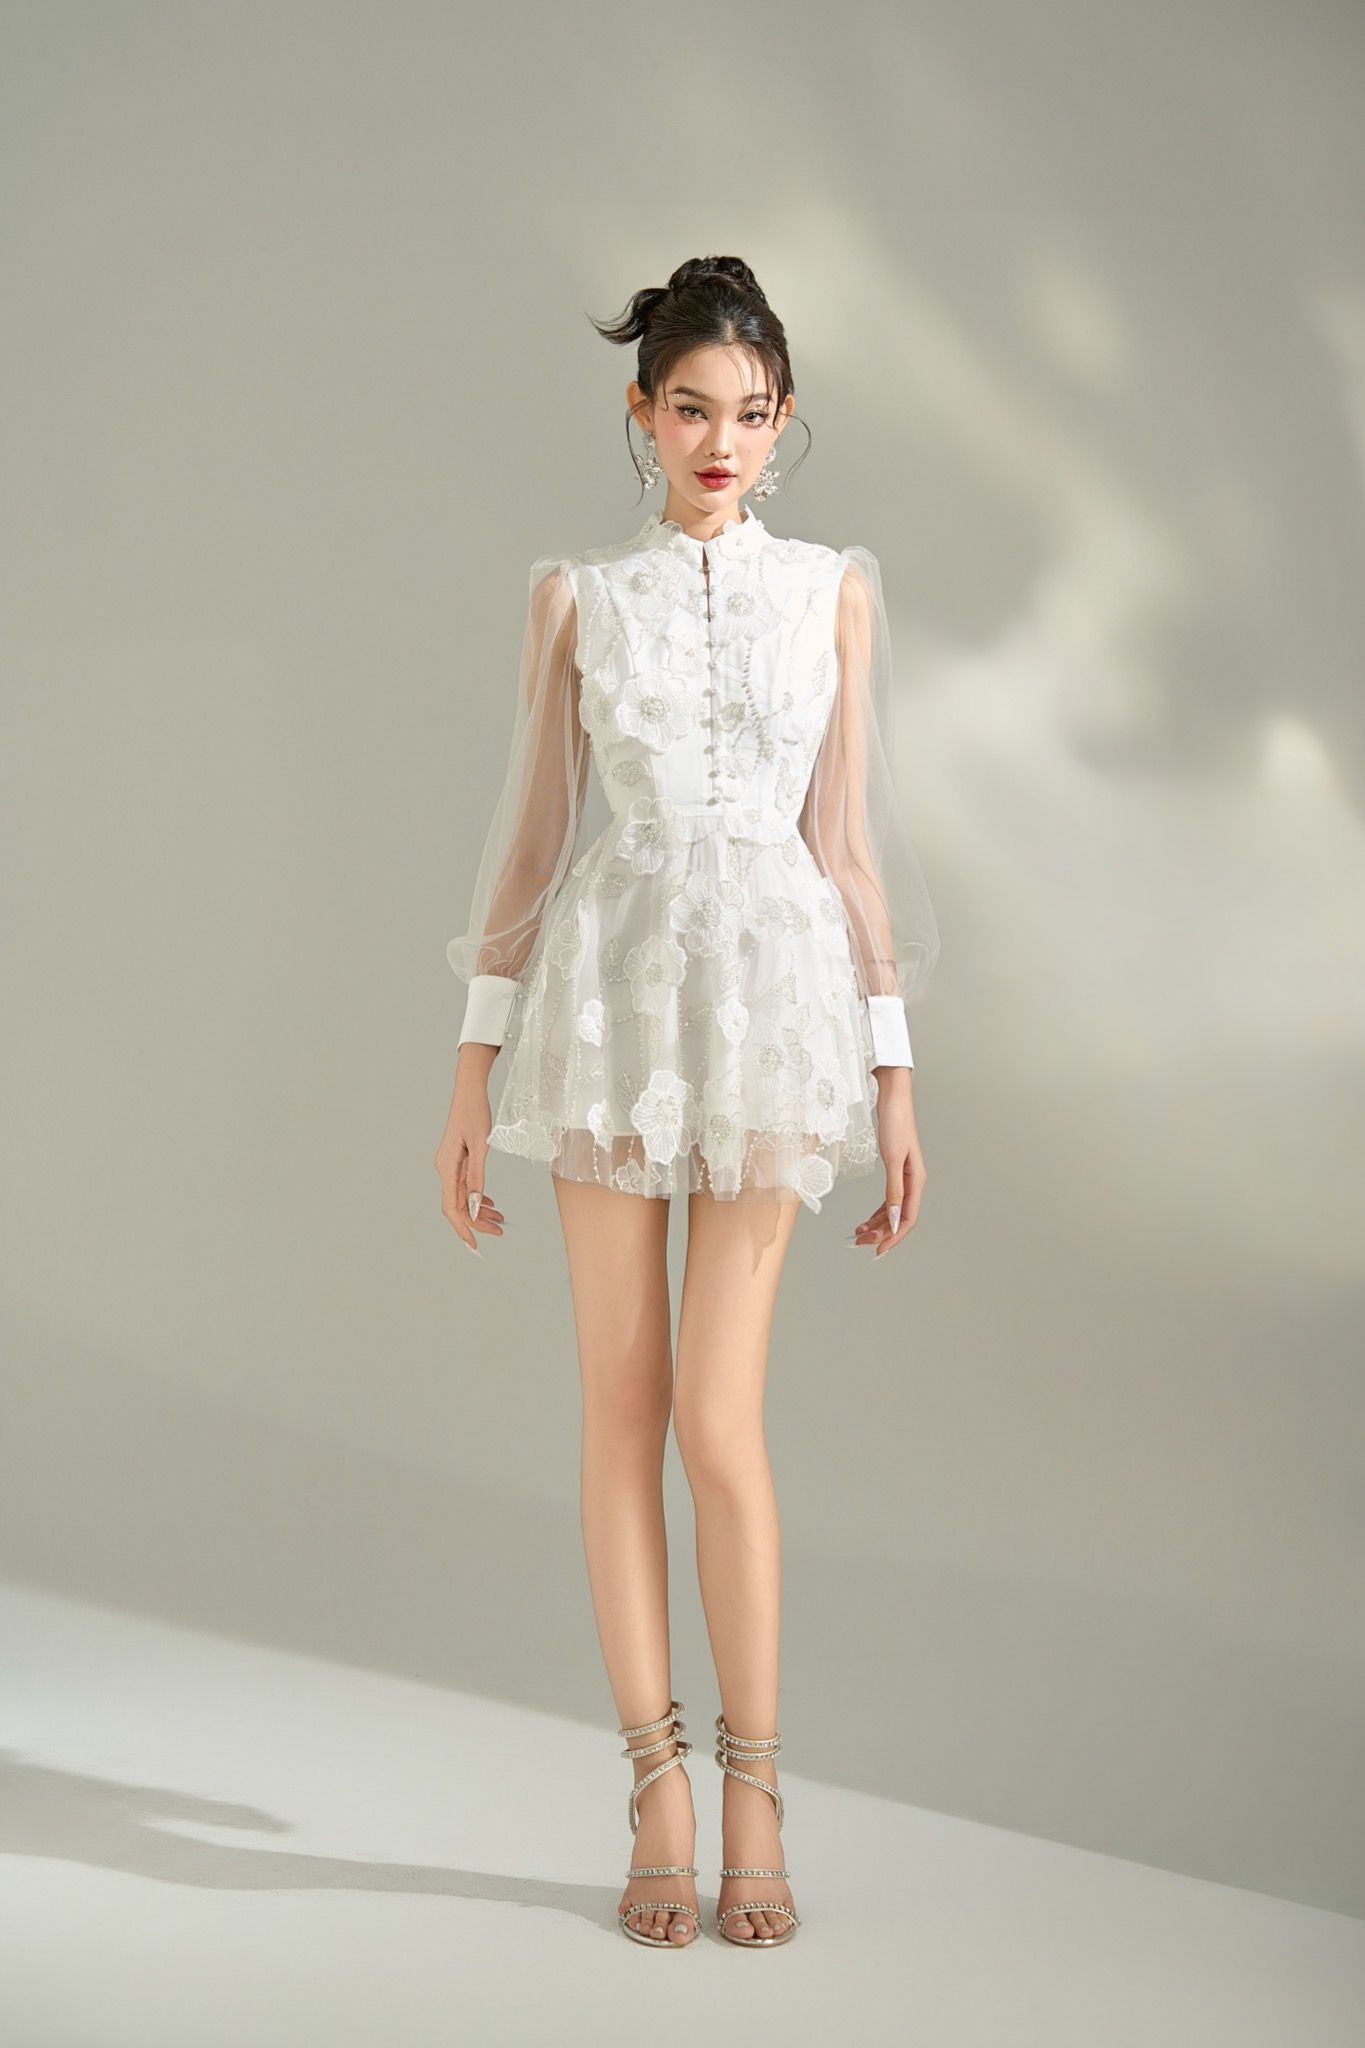  Fiona White Dress 